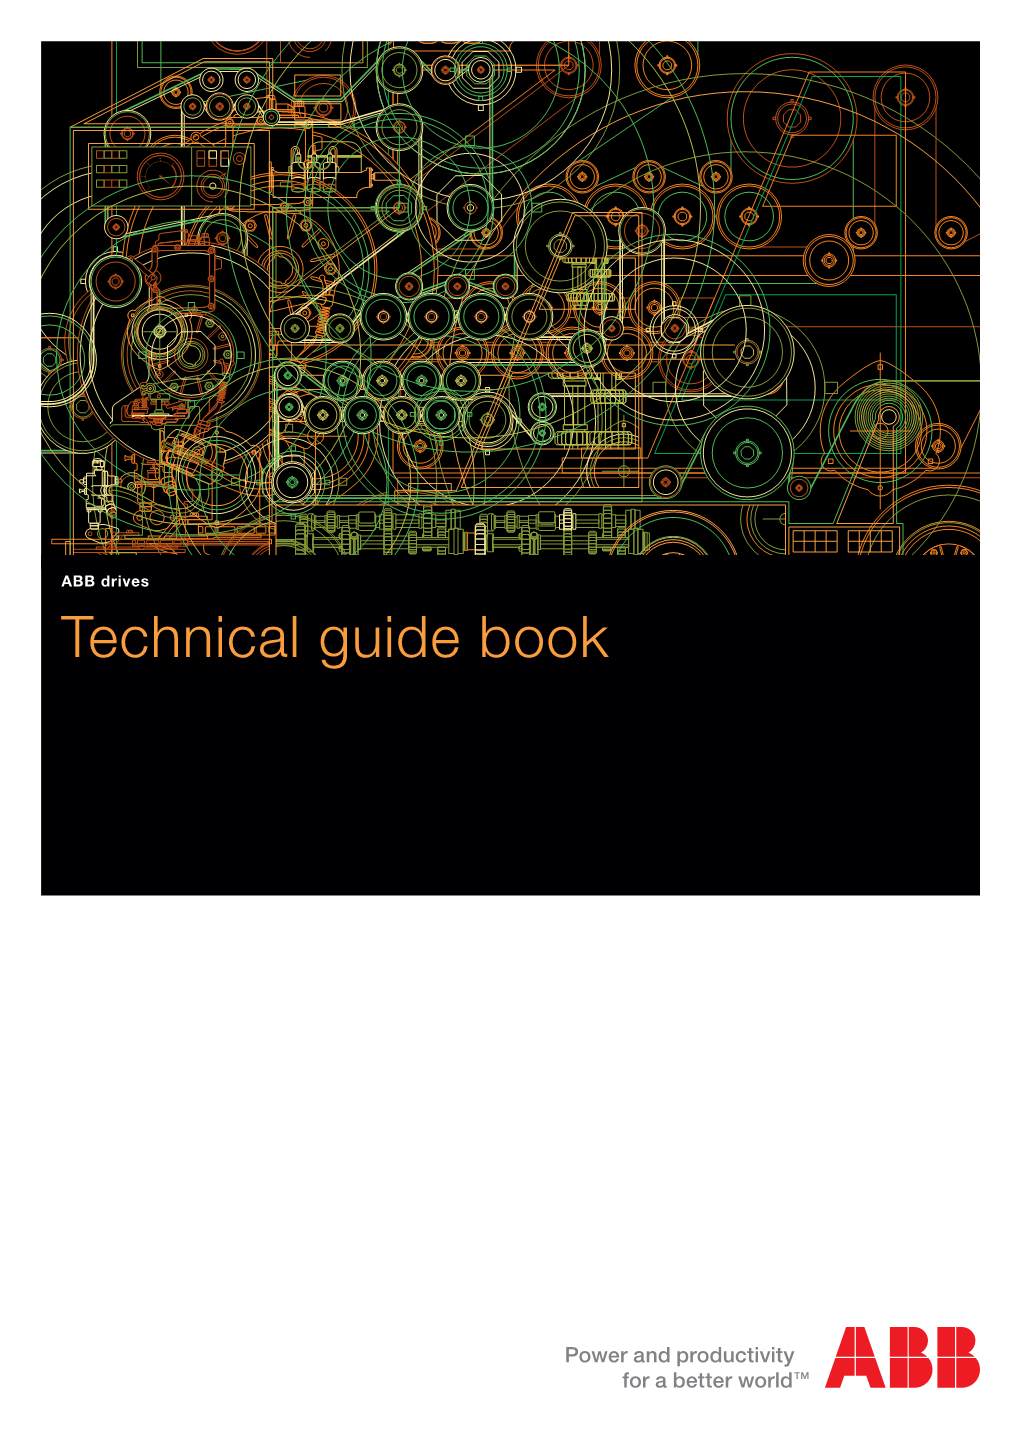 ABB Drives Technical Guide Book 2 ABB Drives I Technical Guide Book ABB Drives - Technical Guide Book